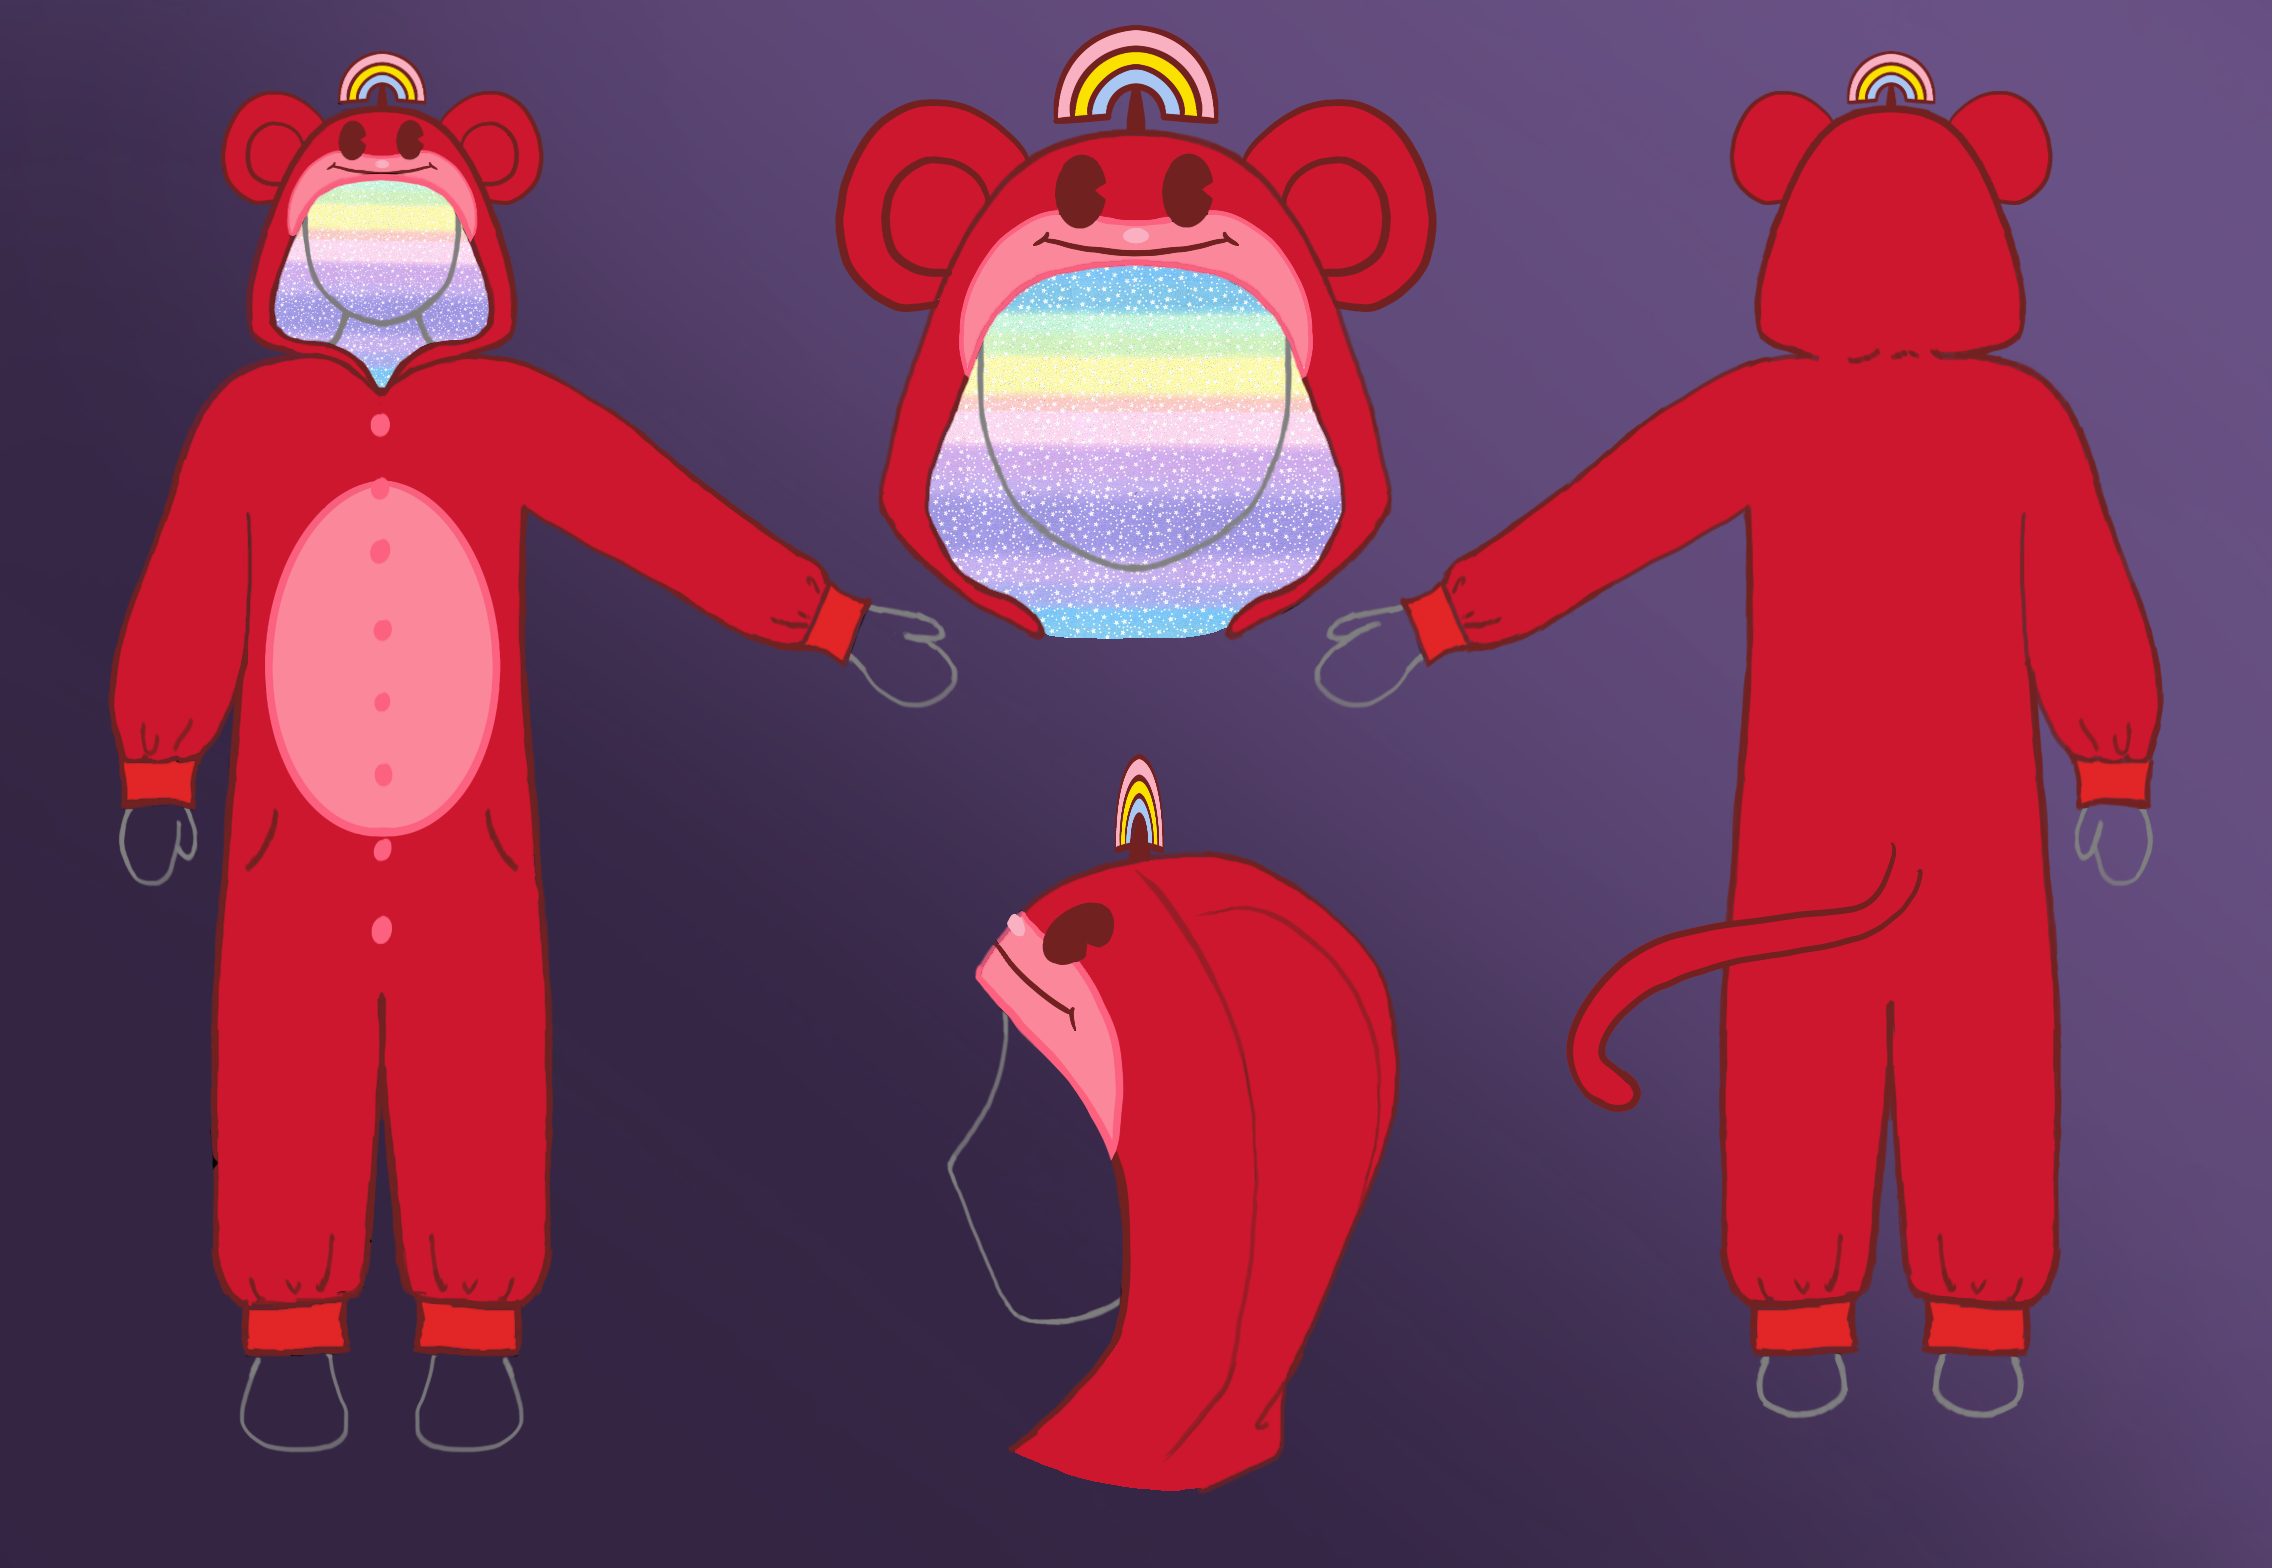 KND rainbow monkey design